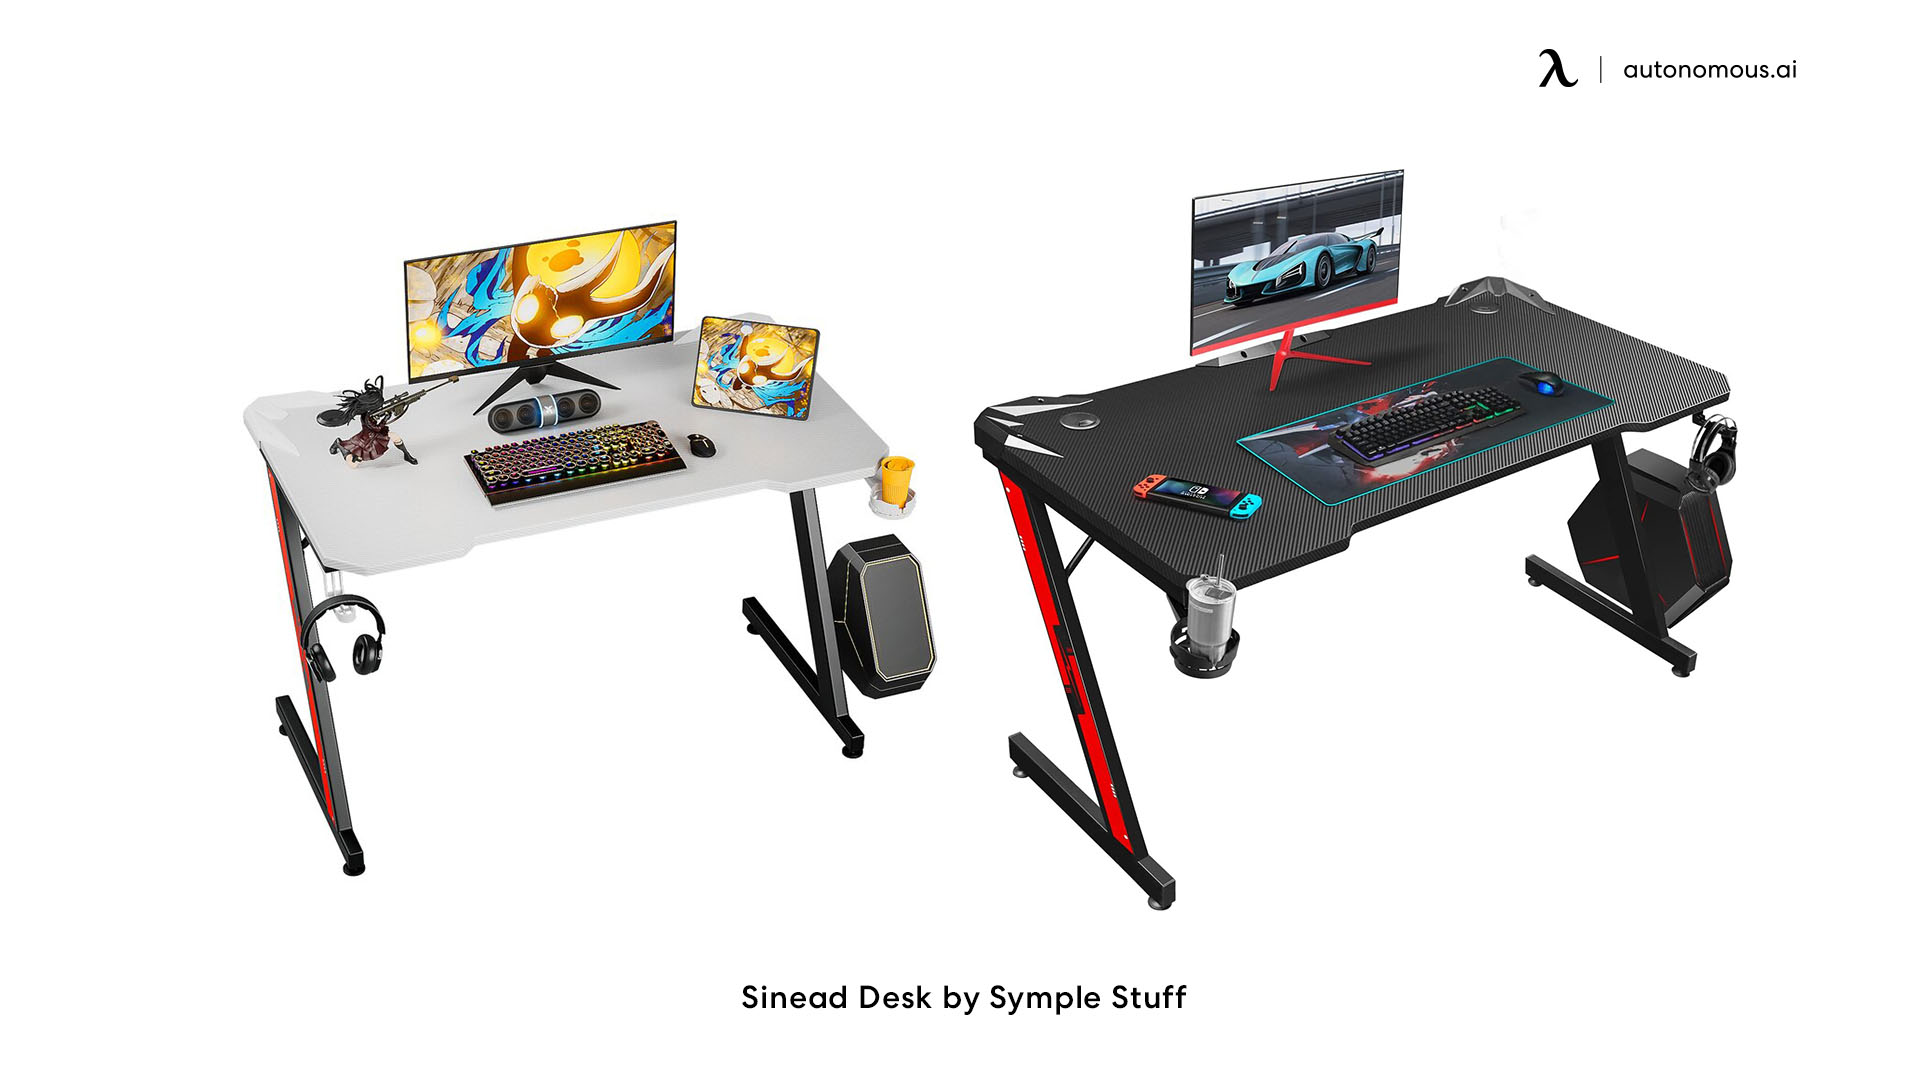 Sinead black gaming desk by Symple Stuff